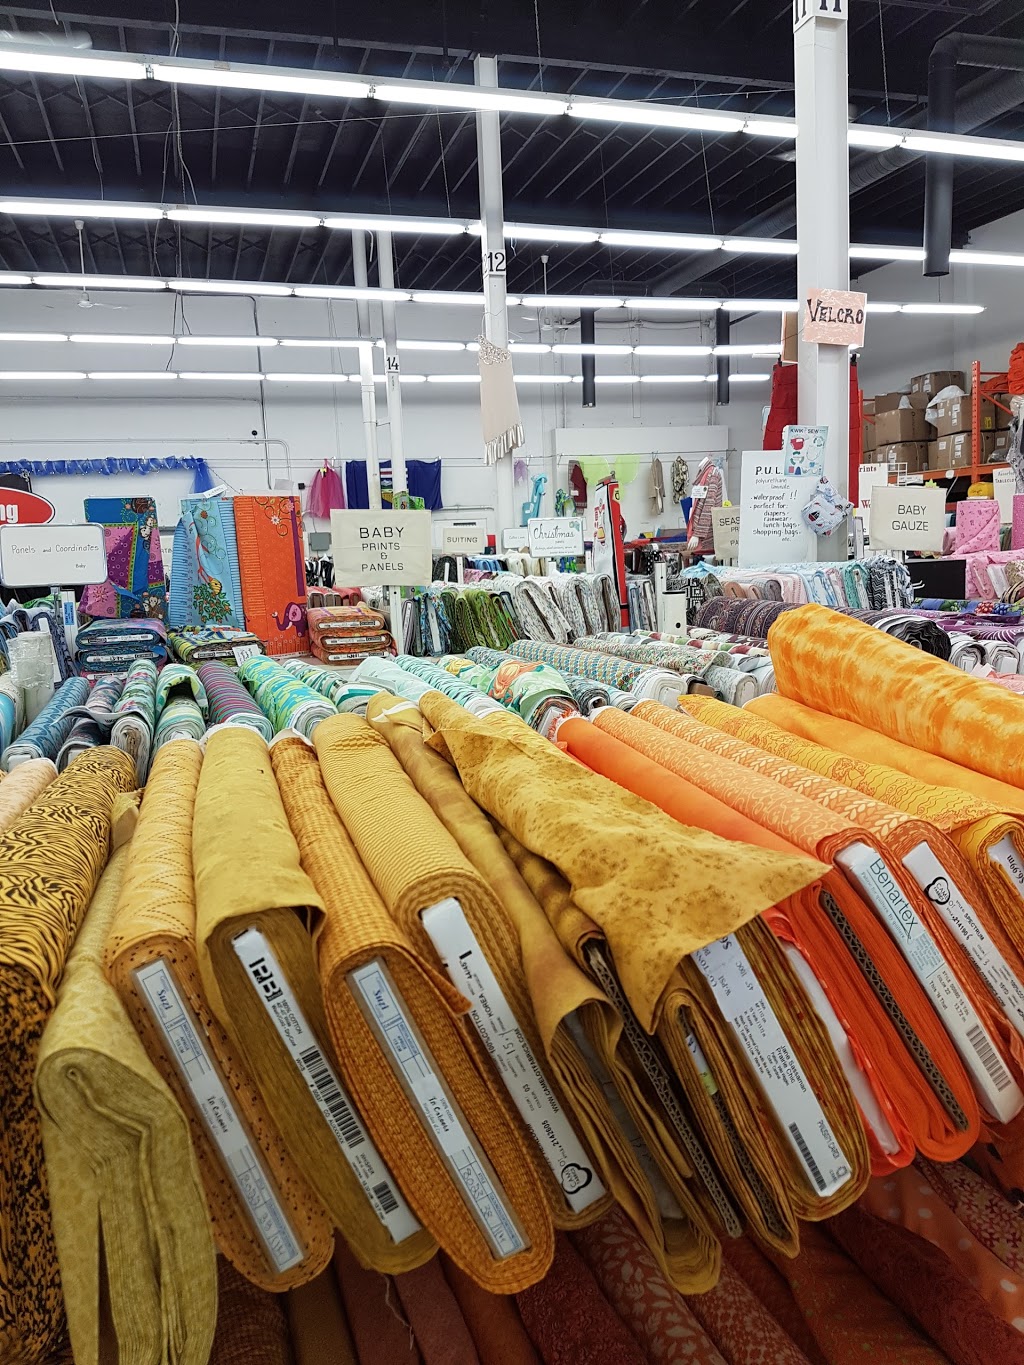 Marshall Fabrics | home goods store | 10003 63 Ave NW, Edmonton, AB T6E 4Z2, Canada | 7804363739 OR +1 780-436-3739